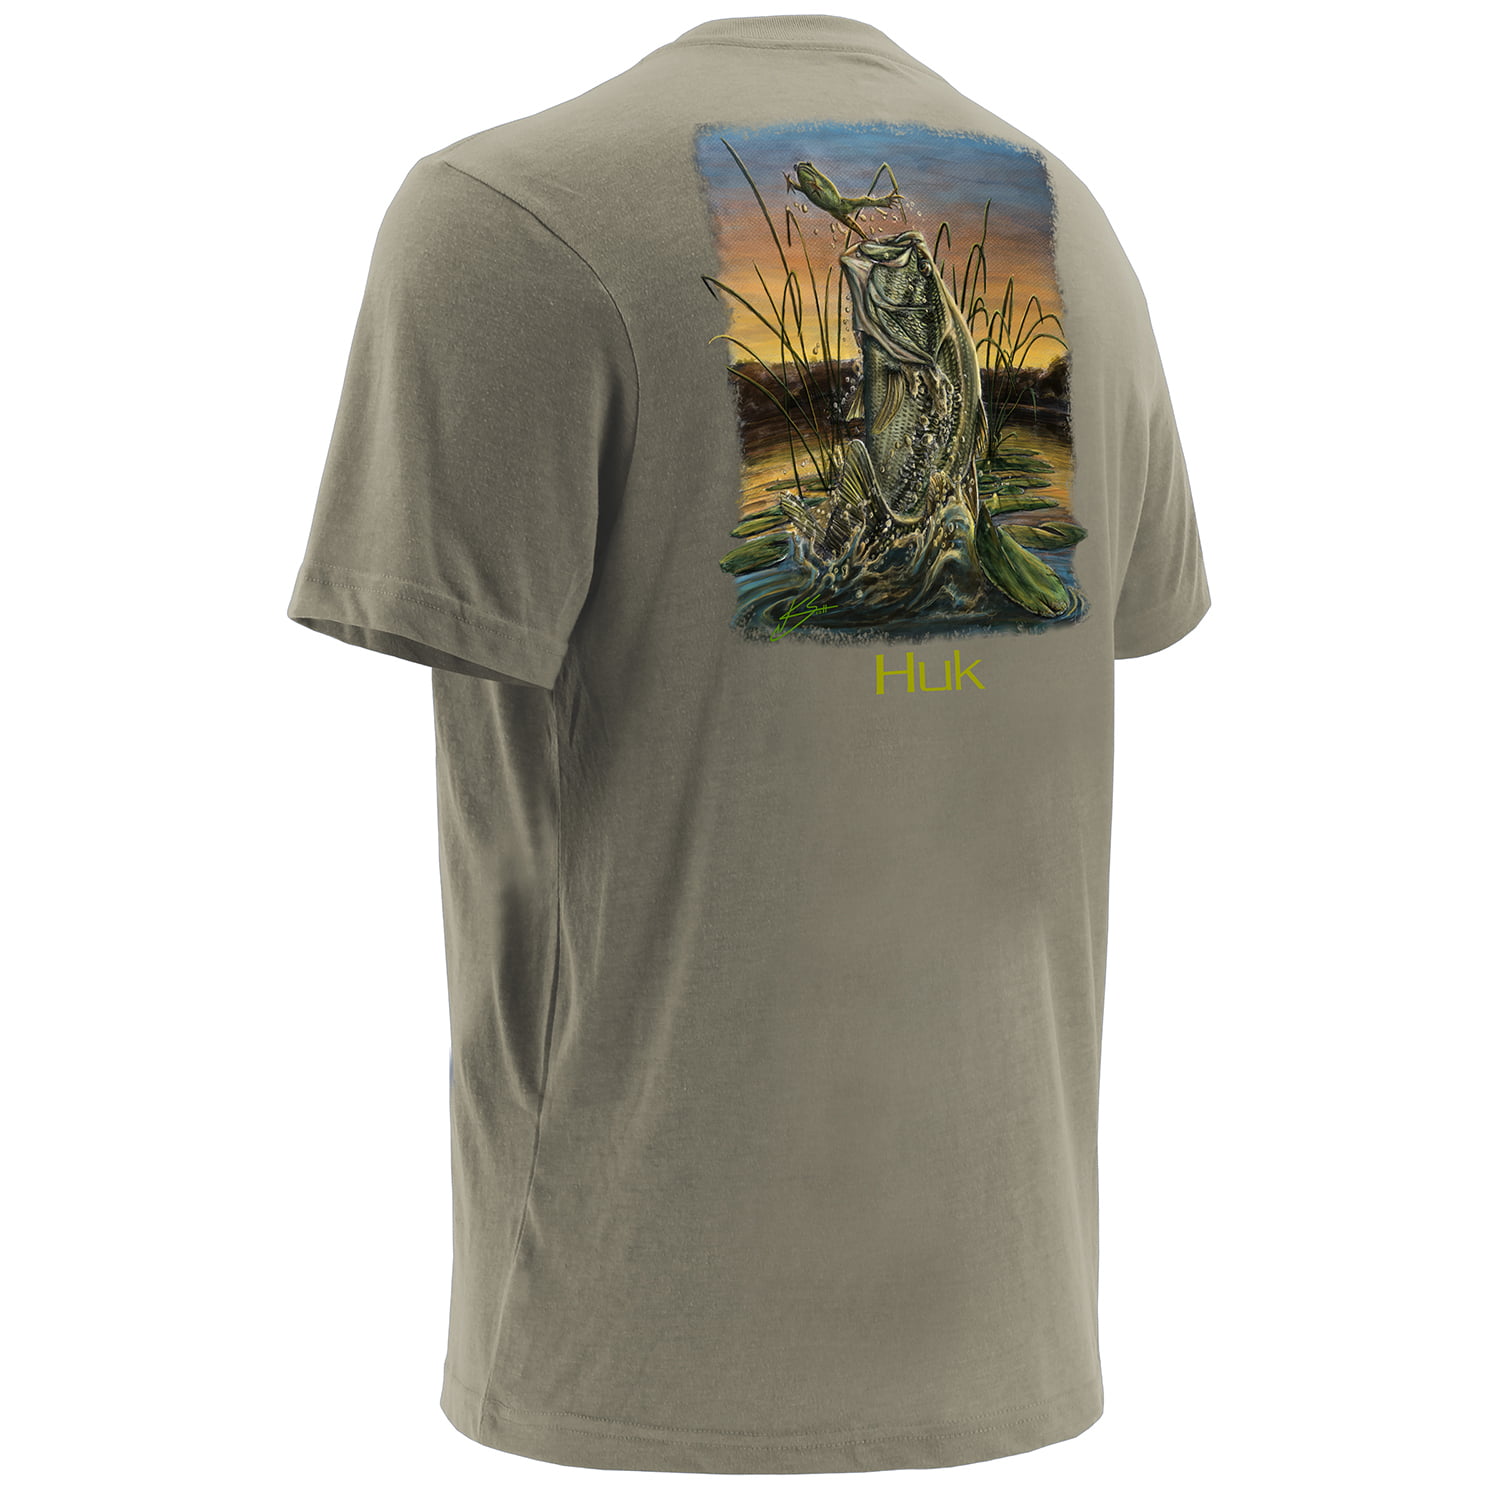 Huk Performance KC Scott Crushed Gray Fishing T-Shirt Men's Size Medium 